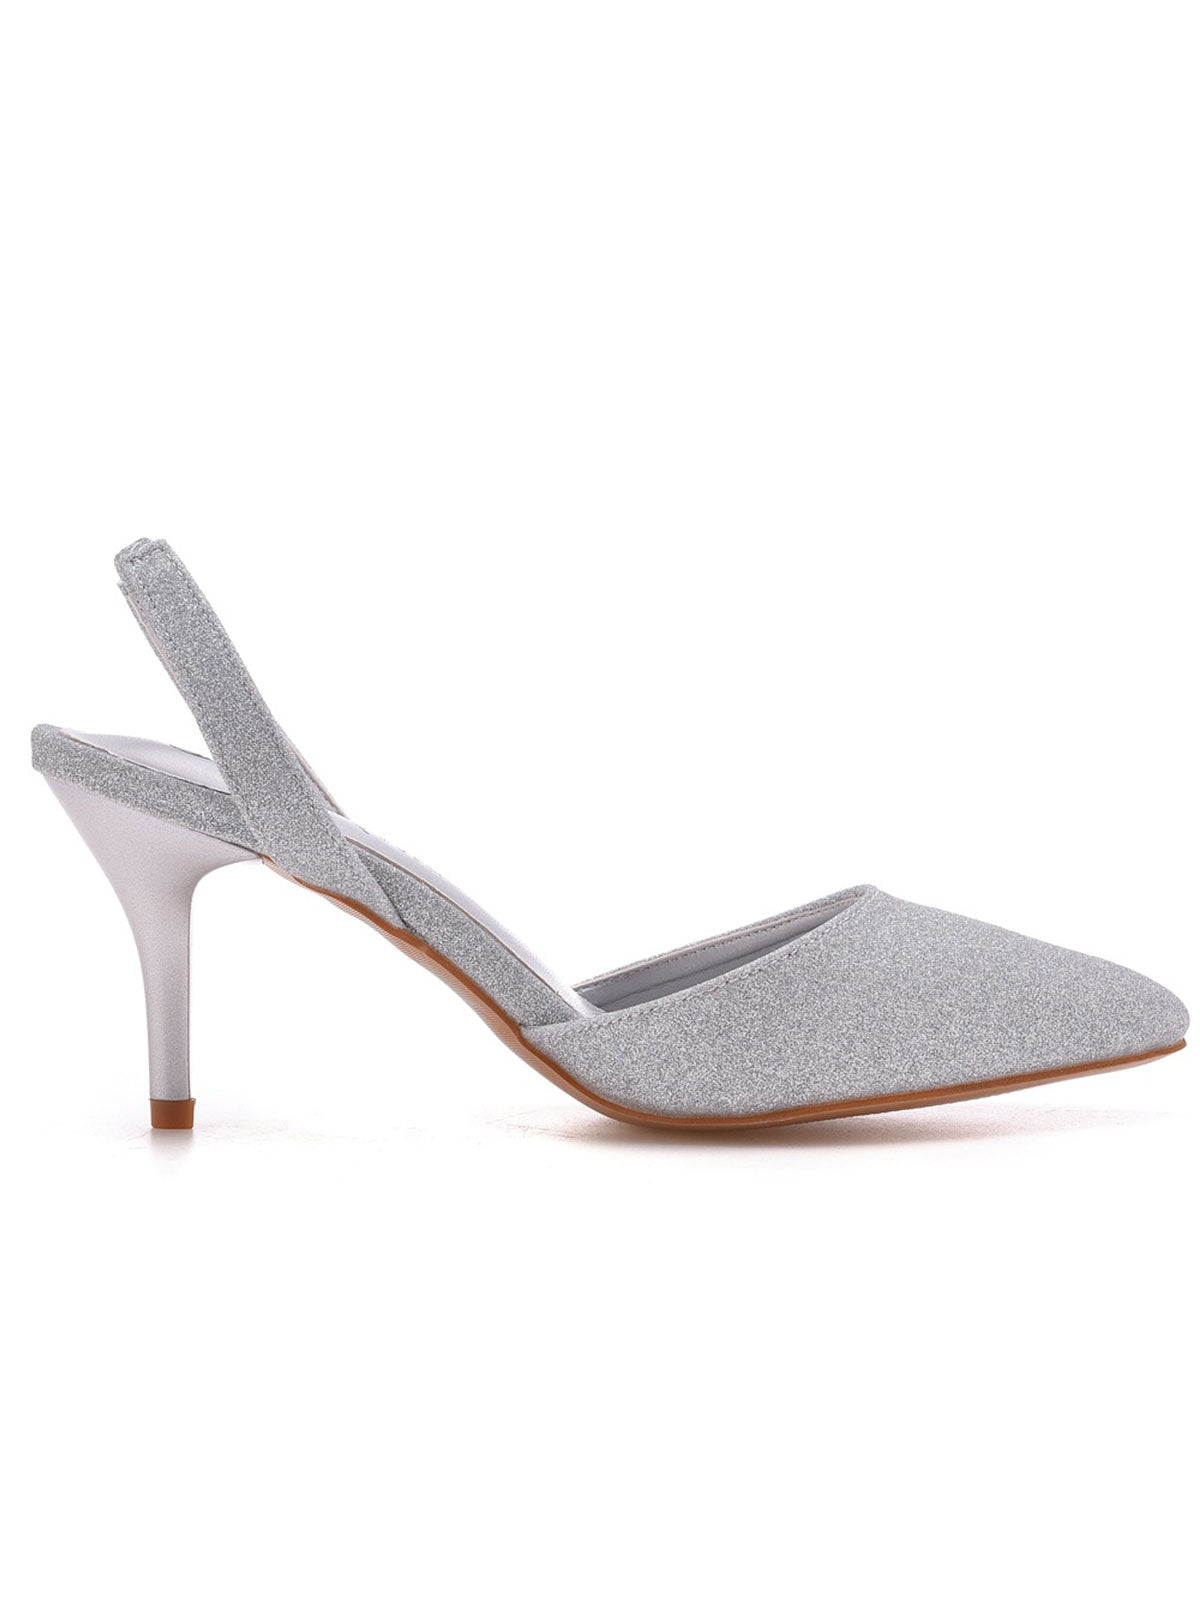 Simple Elegant Pointed Toe Stiletto Slingback High Heels